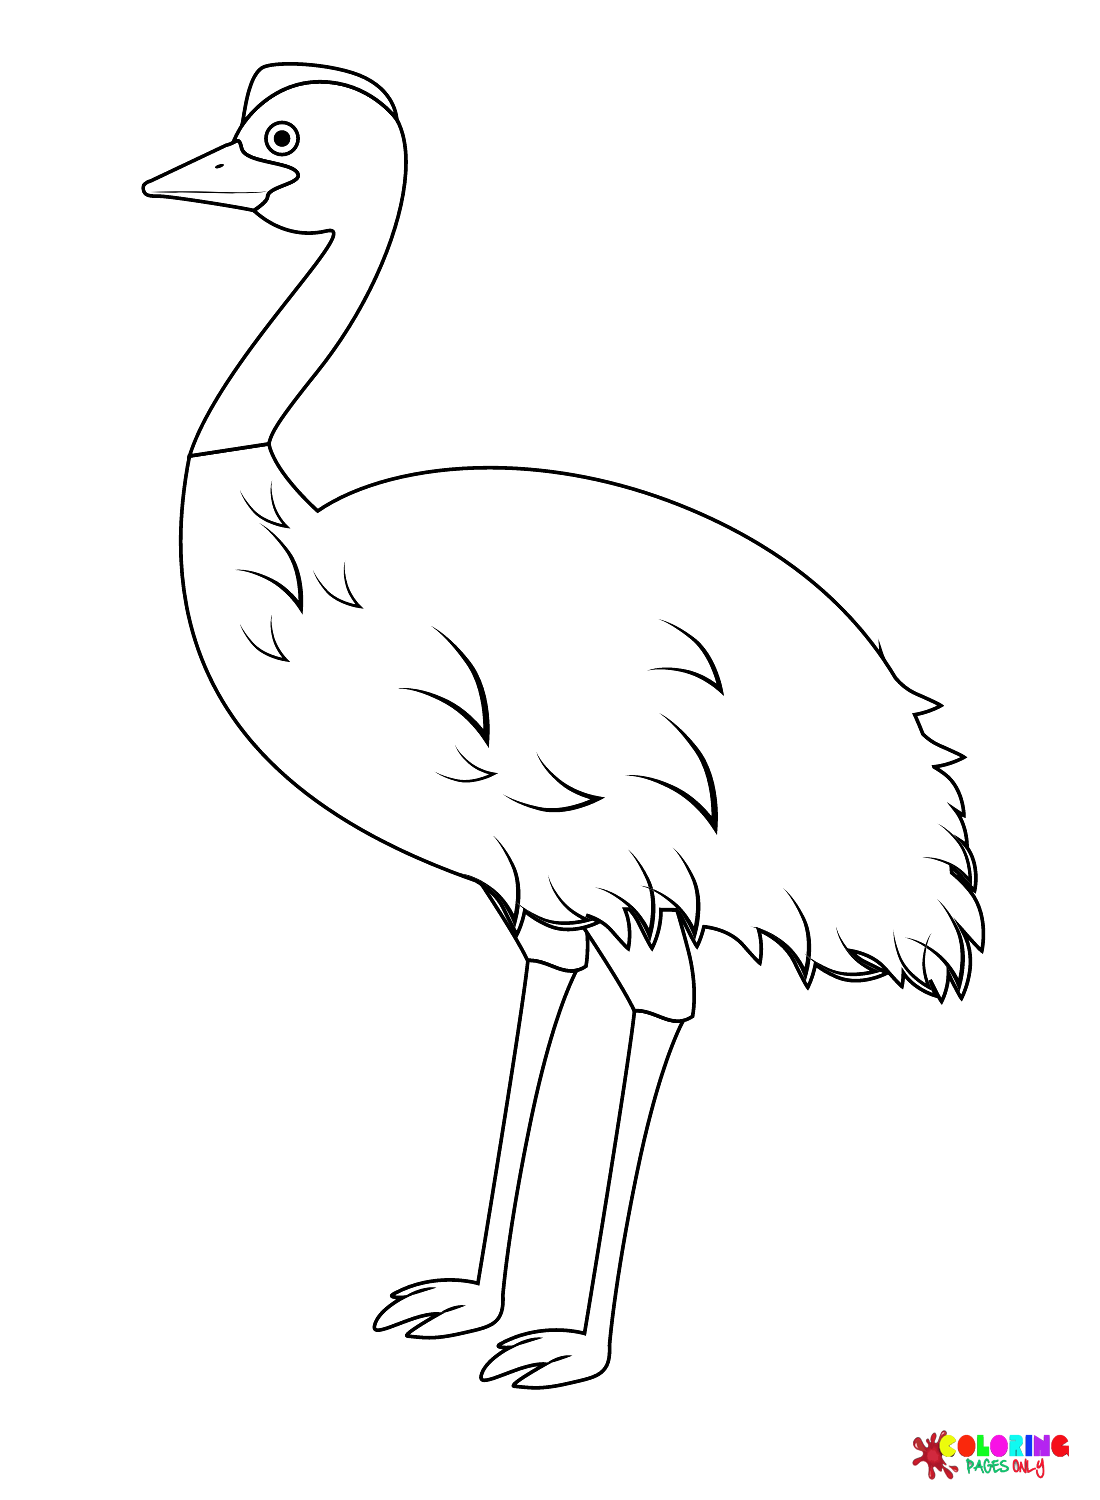 Emu Australia da Emu